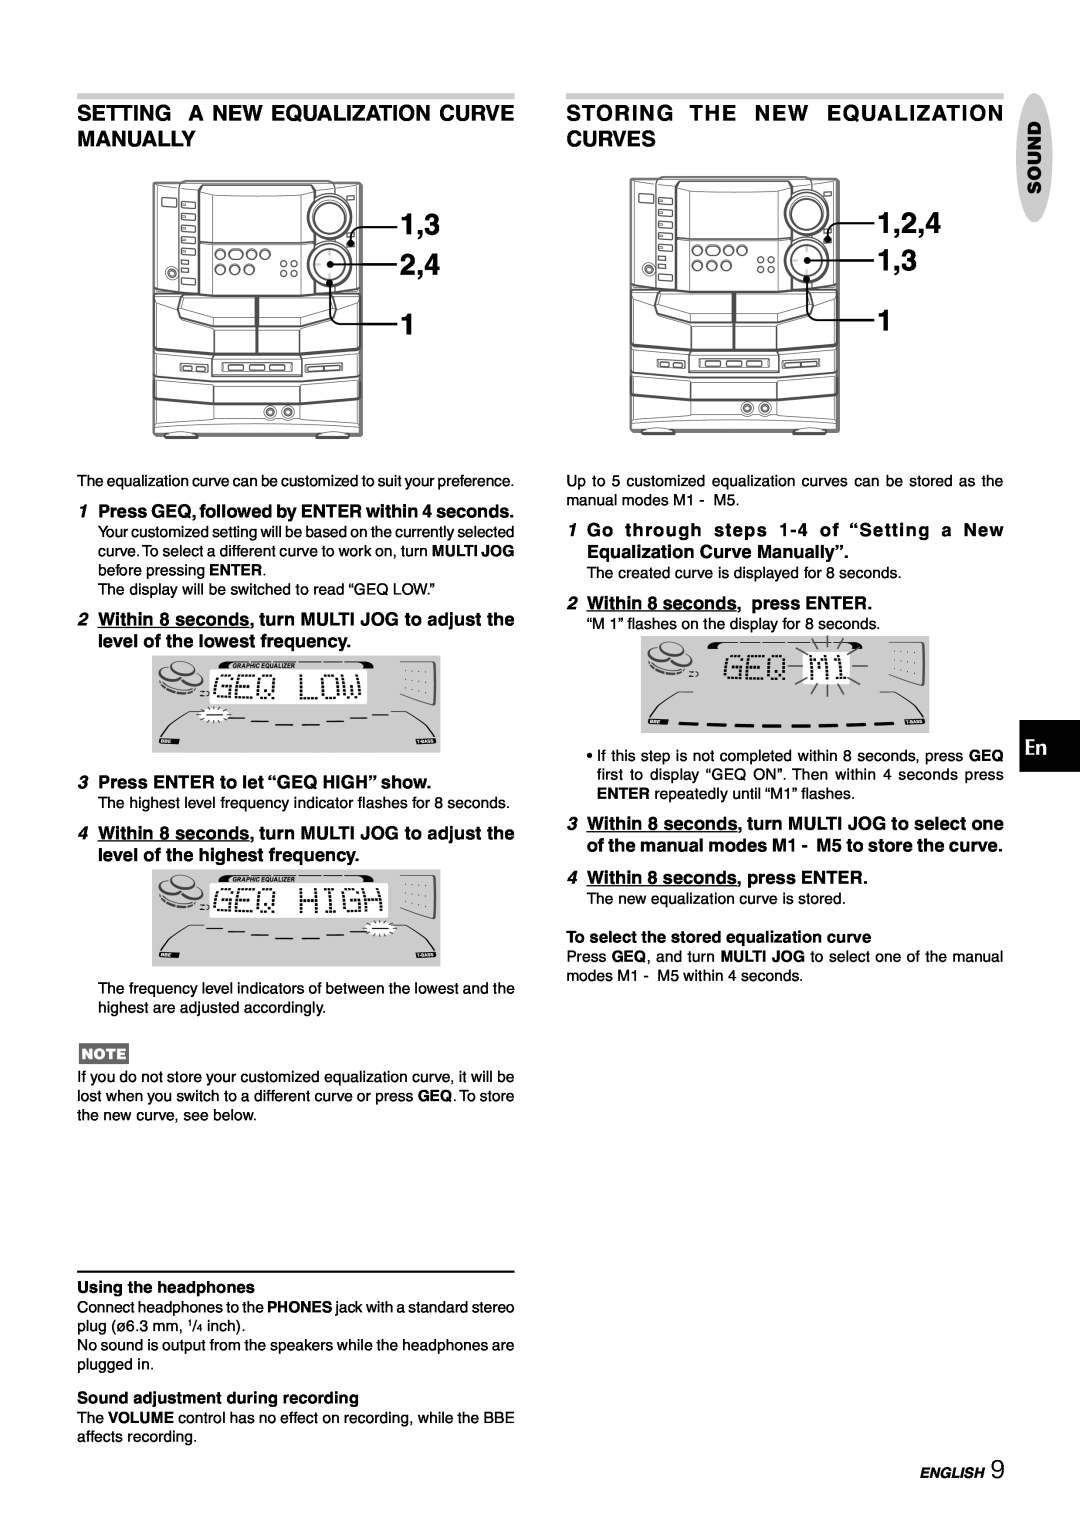 Sony NSX-AJ80 manual Setting A New Equalization Curve Manually, Storing The New Equalization, Curves 